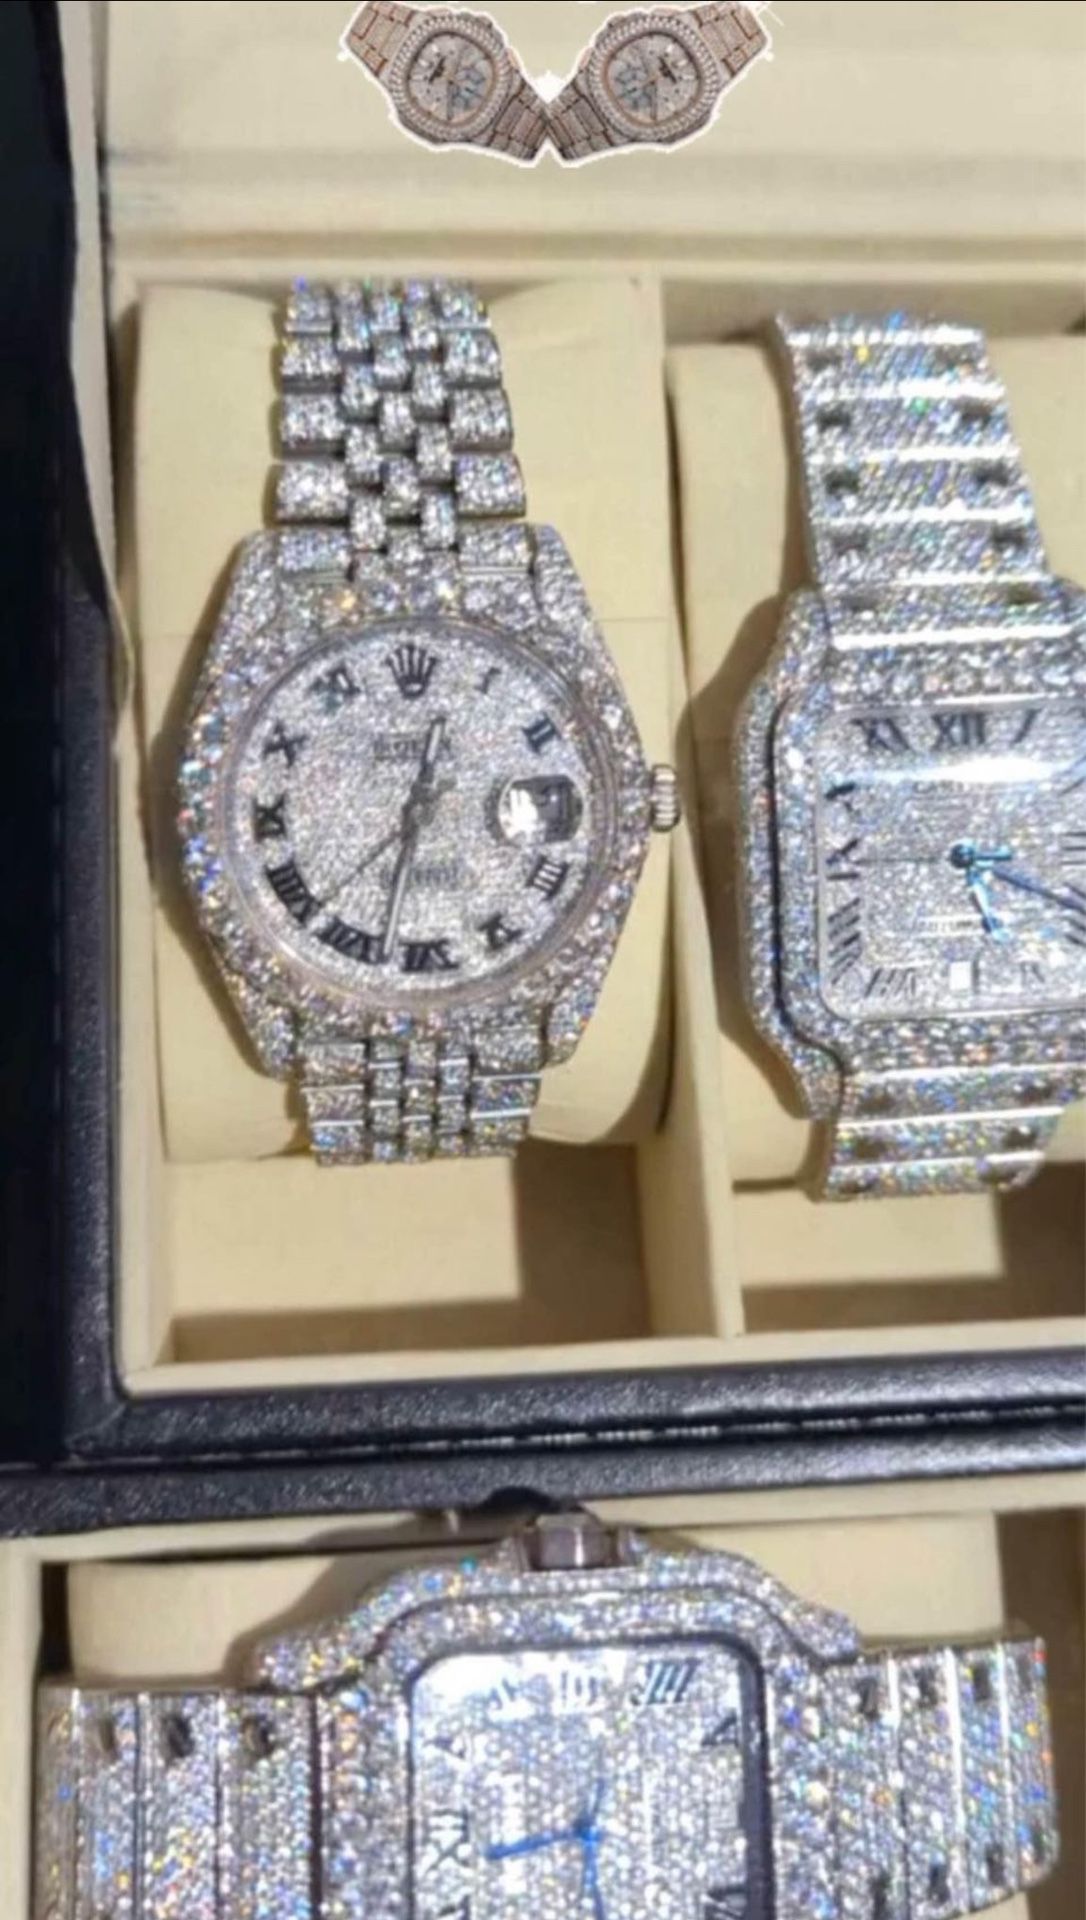 VVS Diamond moissanite Watches